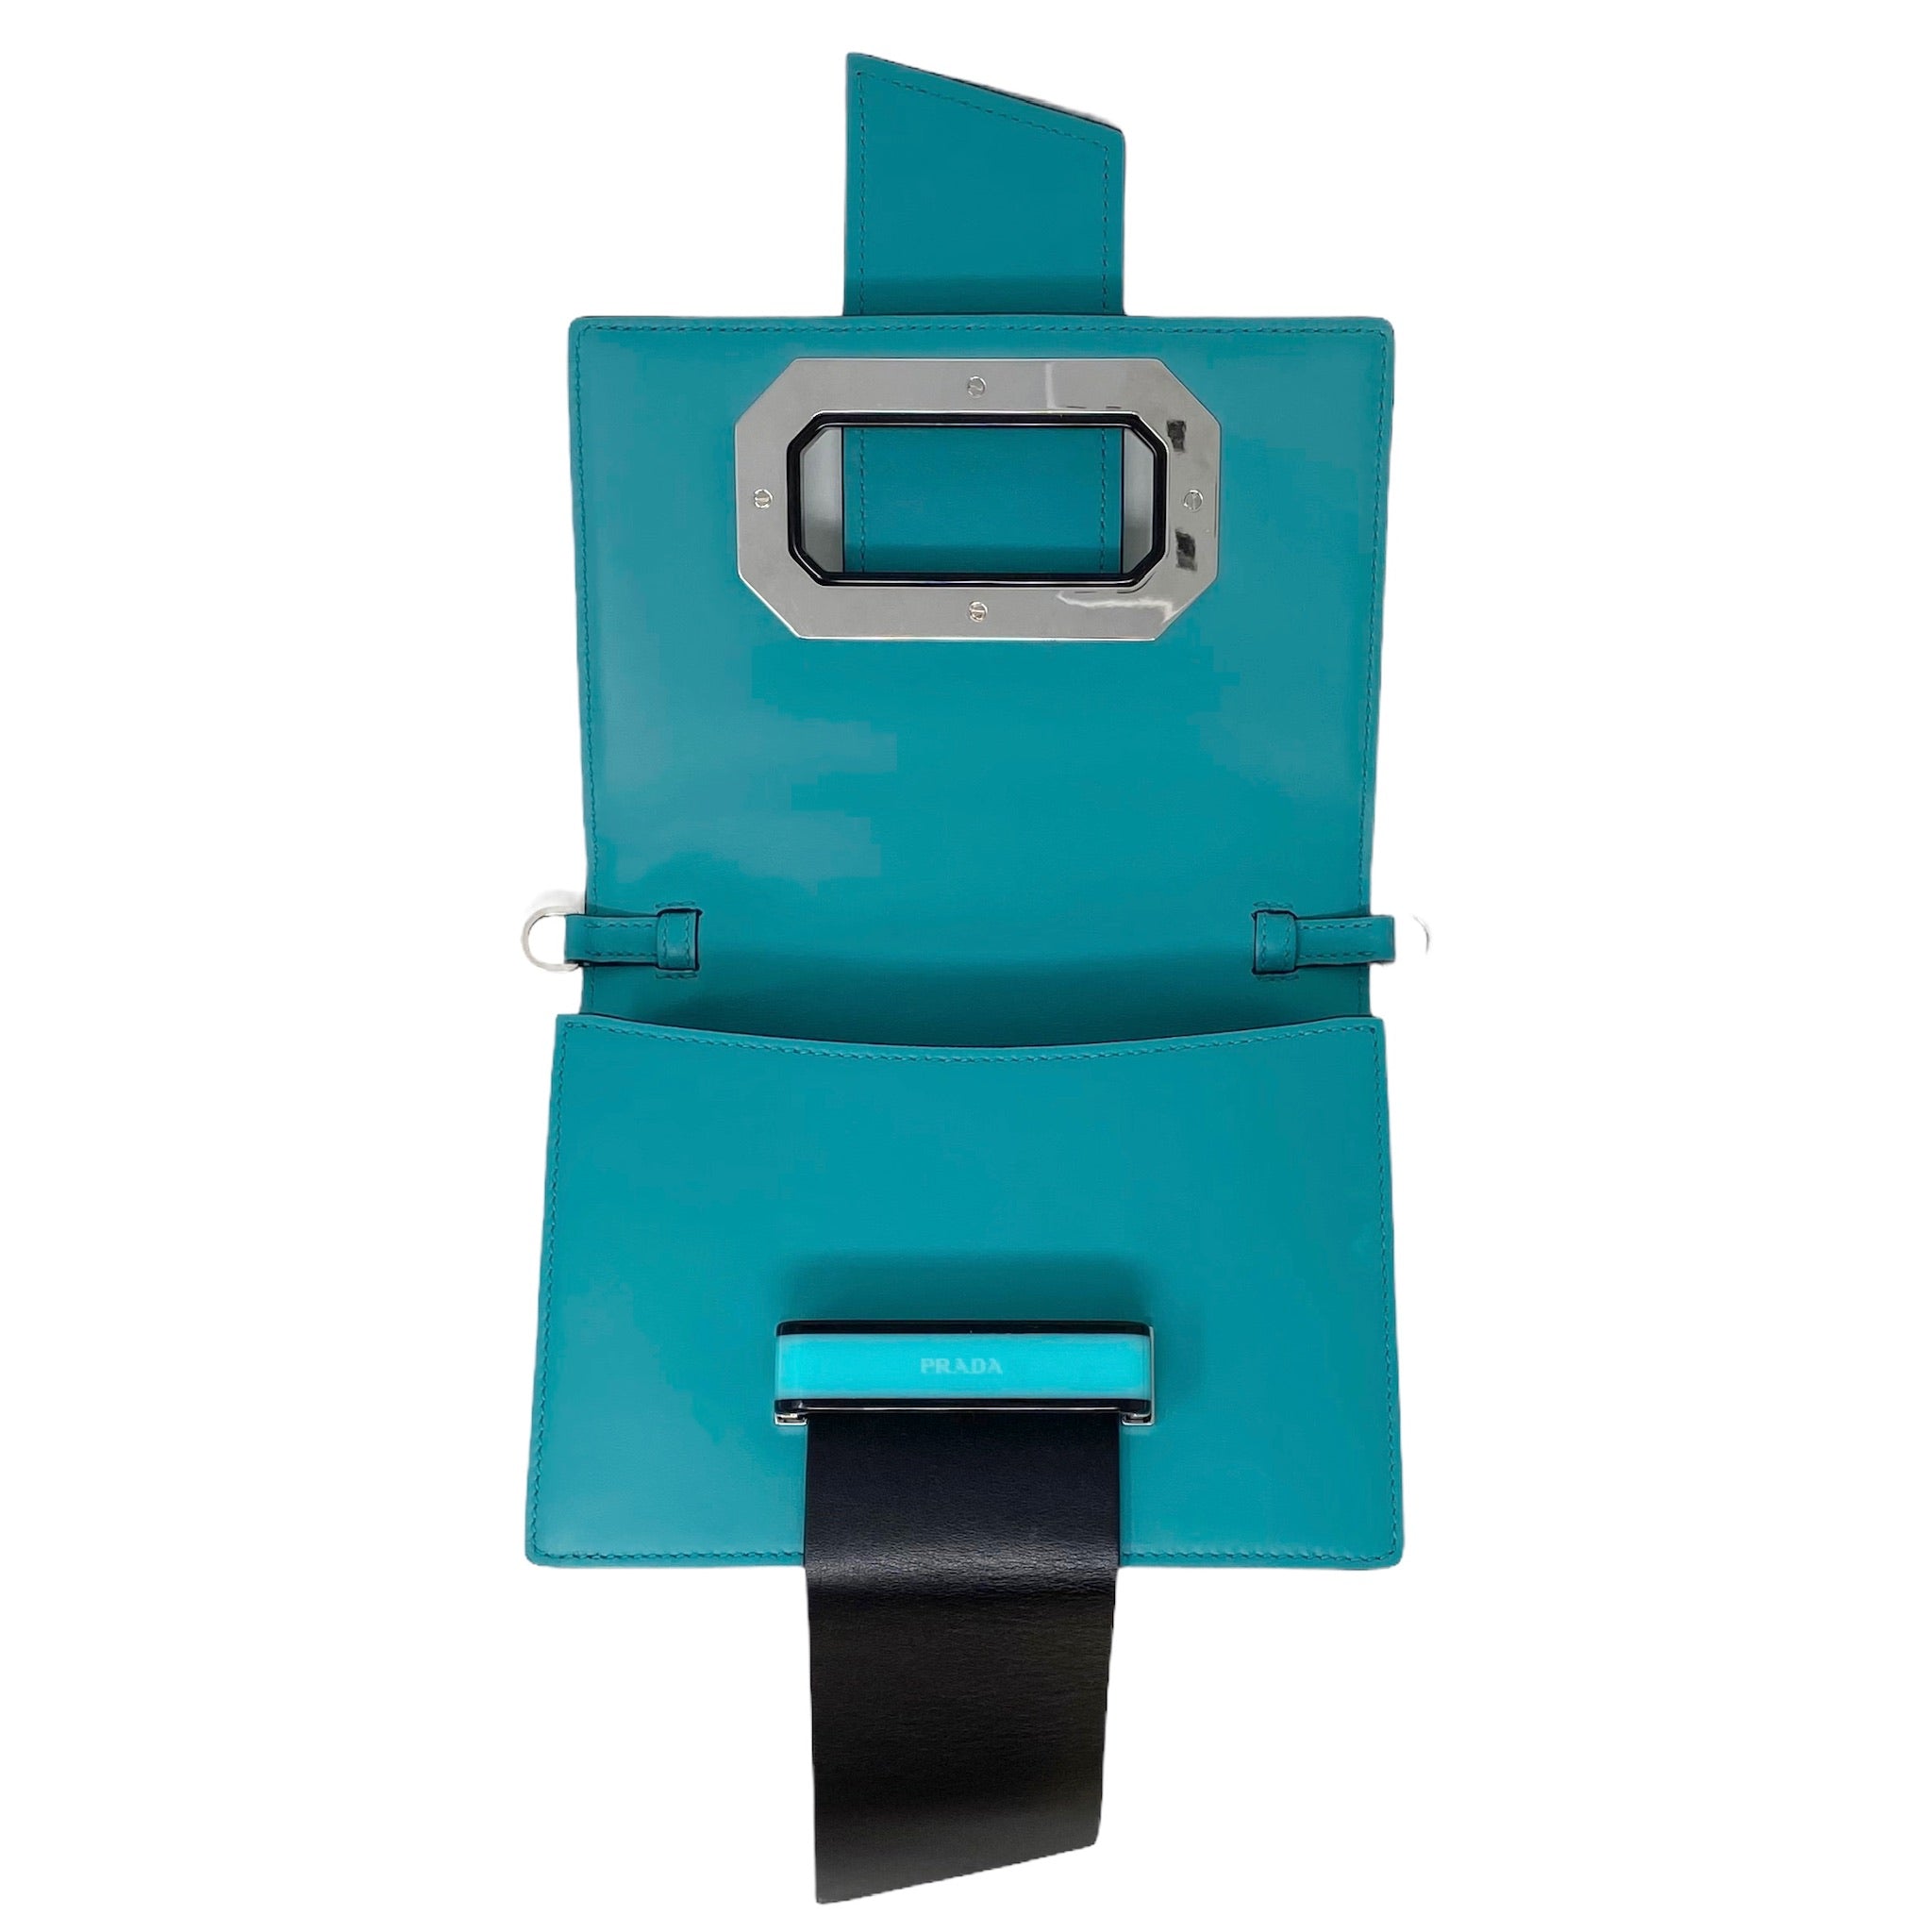 Prada Turquoise Plex Ribbon Geometric Crossbody Bag